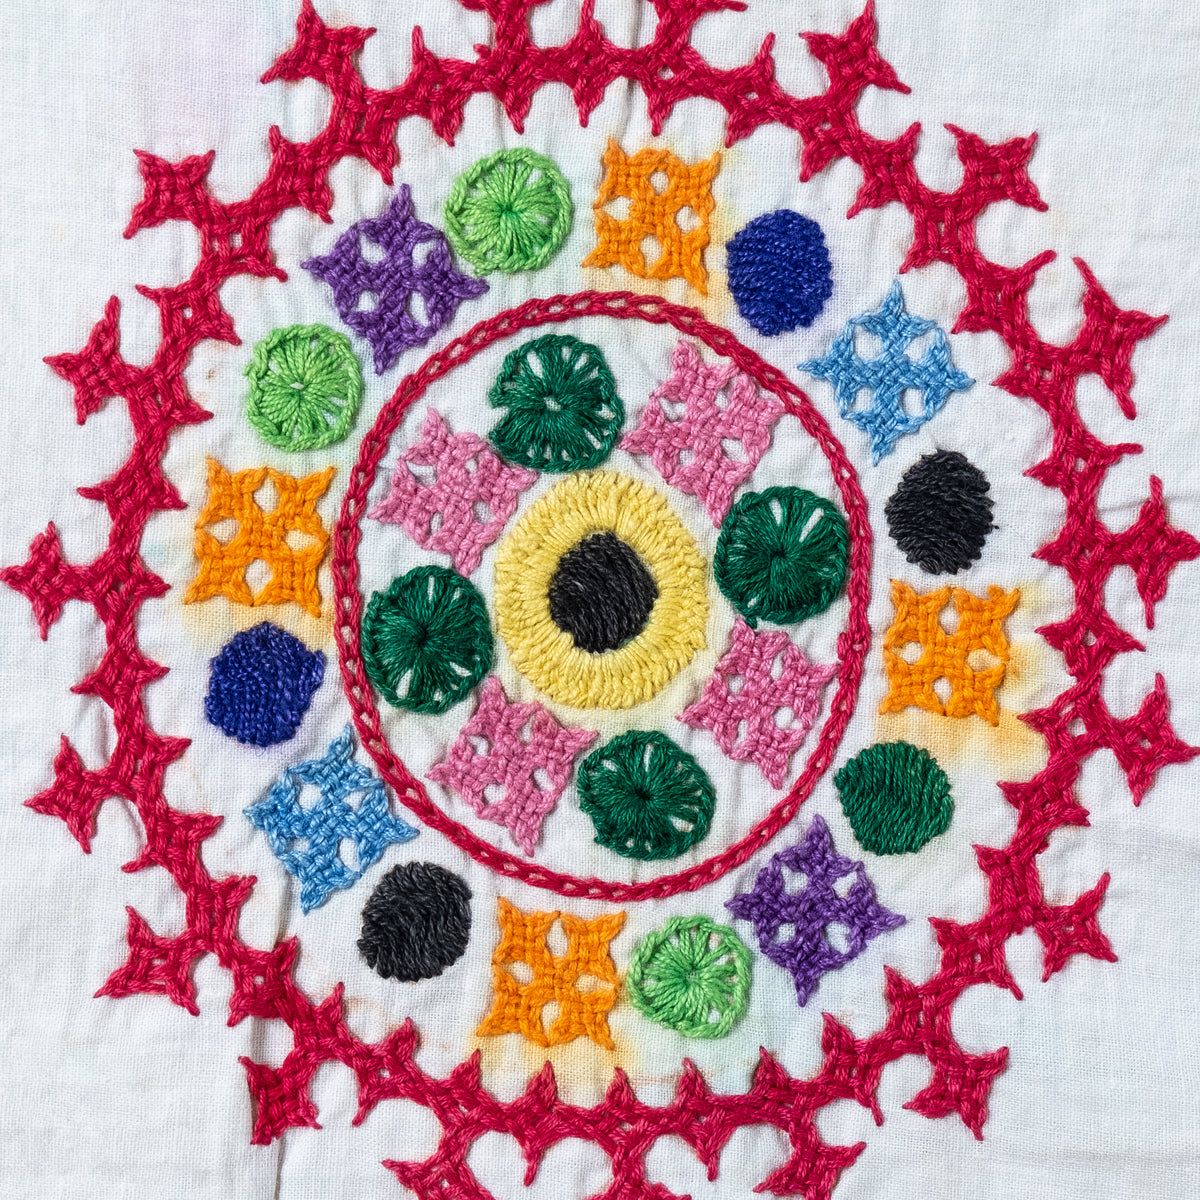 World Embroidery Class Series II